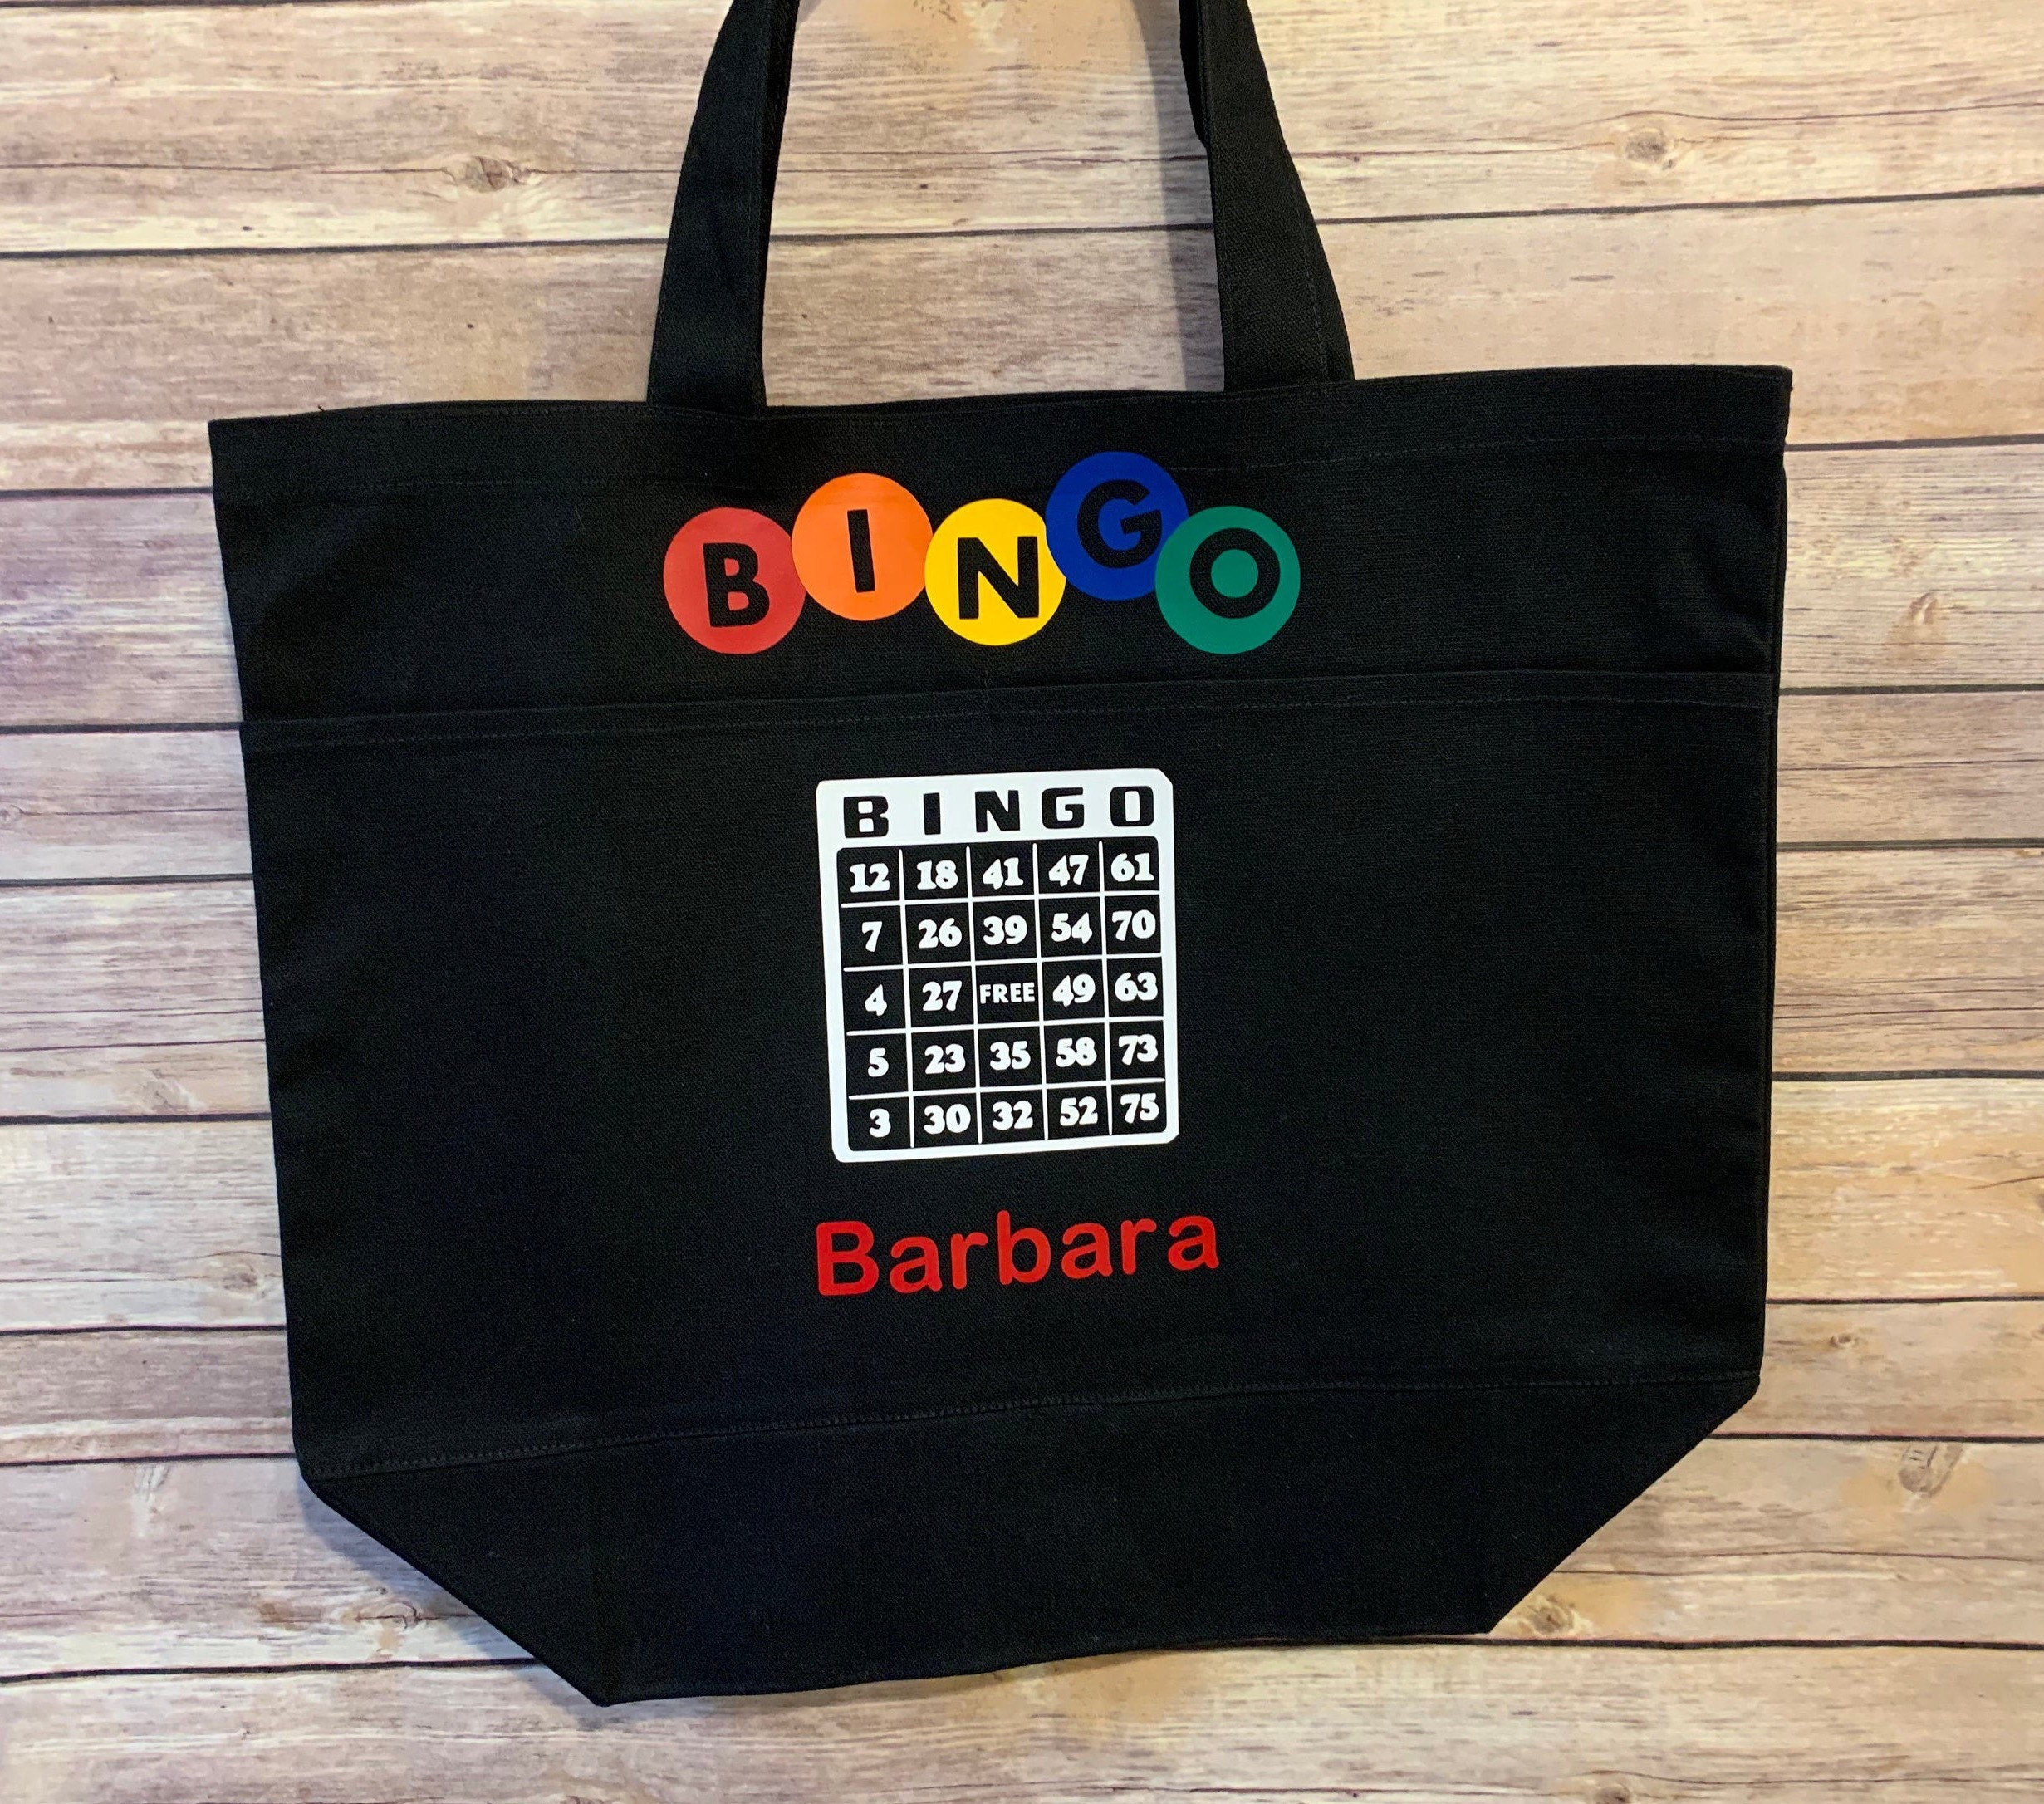 9 Bingo bag ideas  bingo bag bag pattern sewing bag